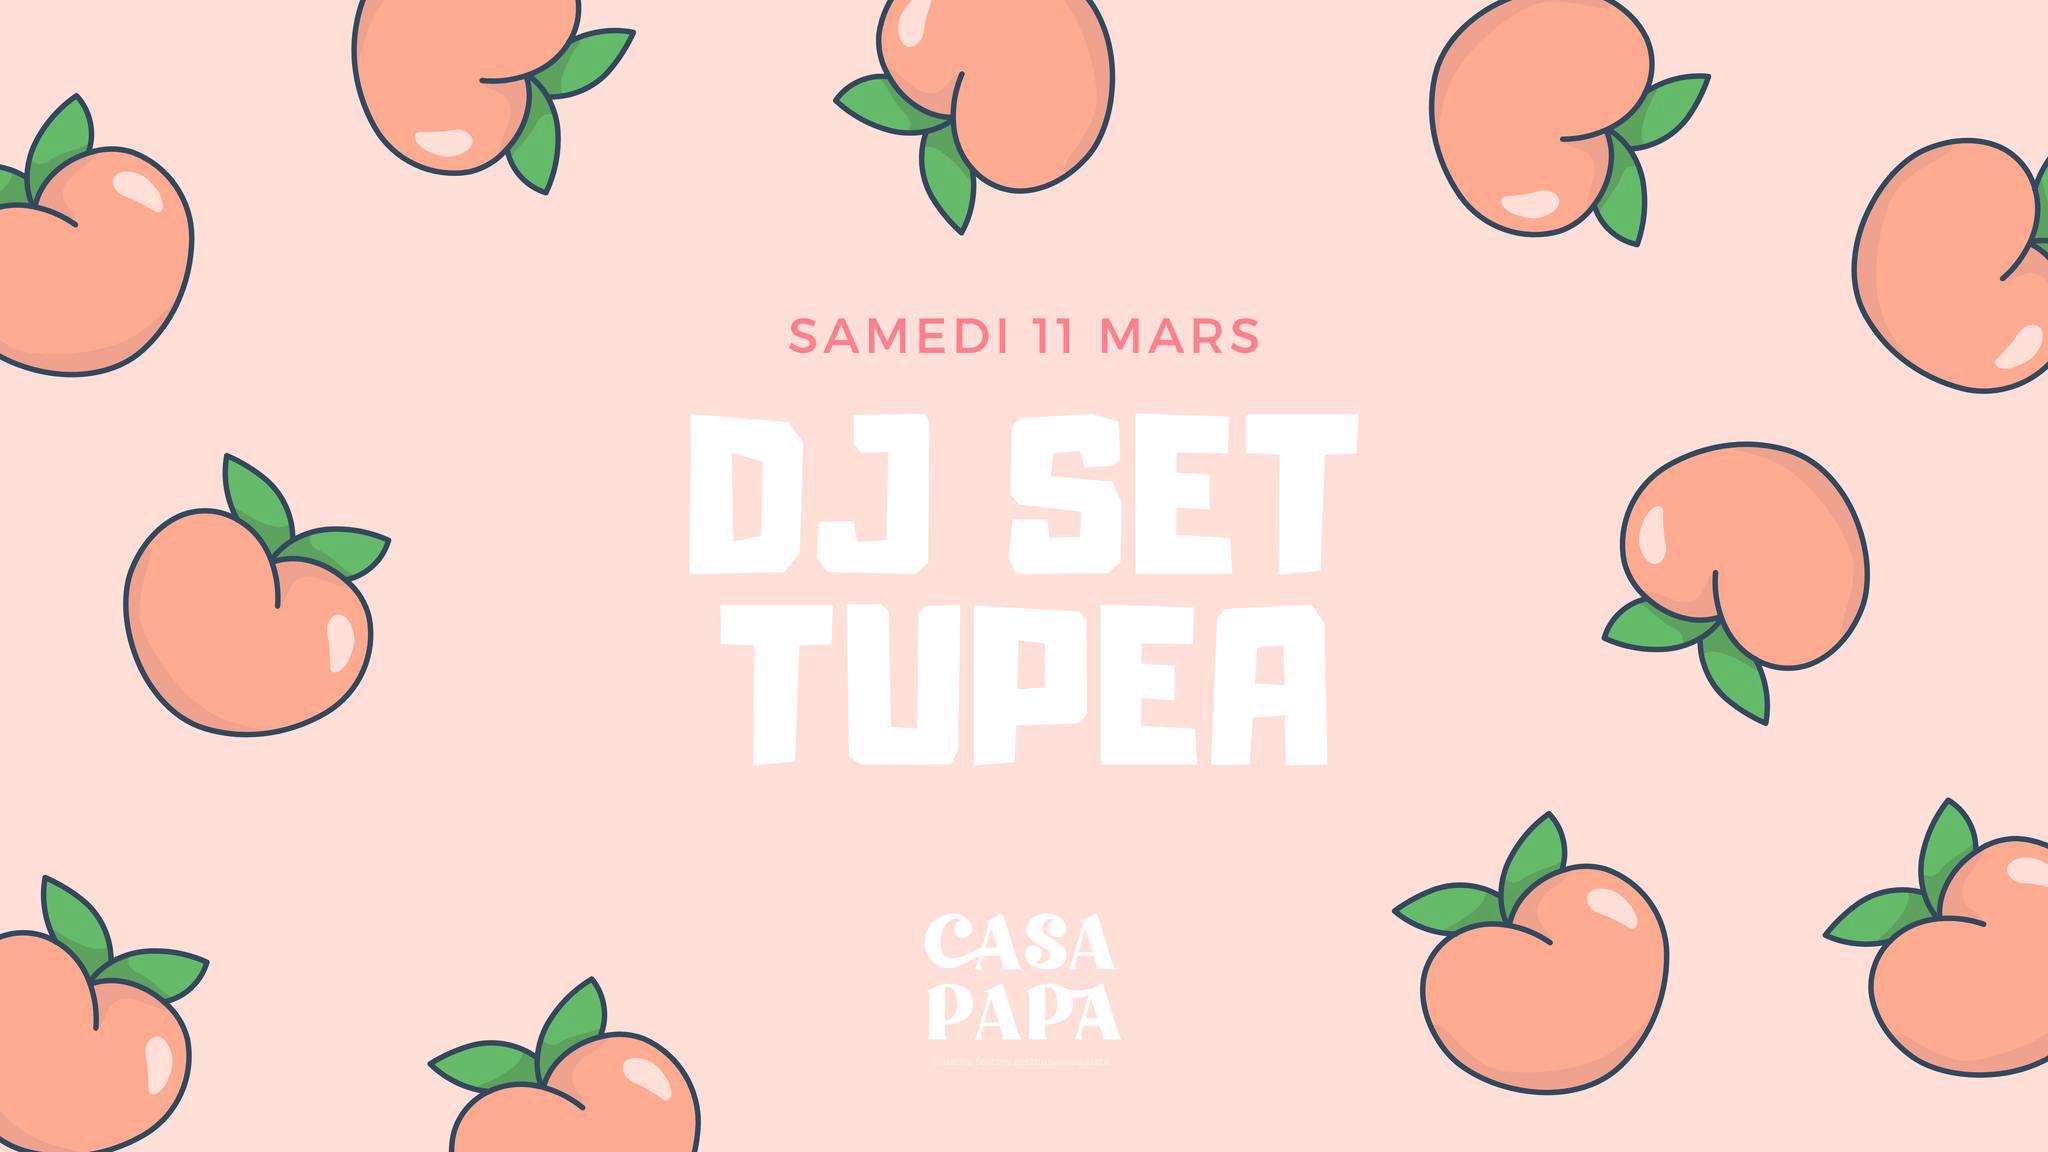 DJ set Tupea / Disco House - Casa Papa